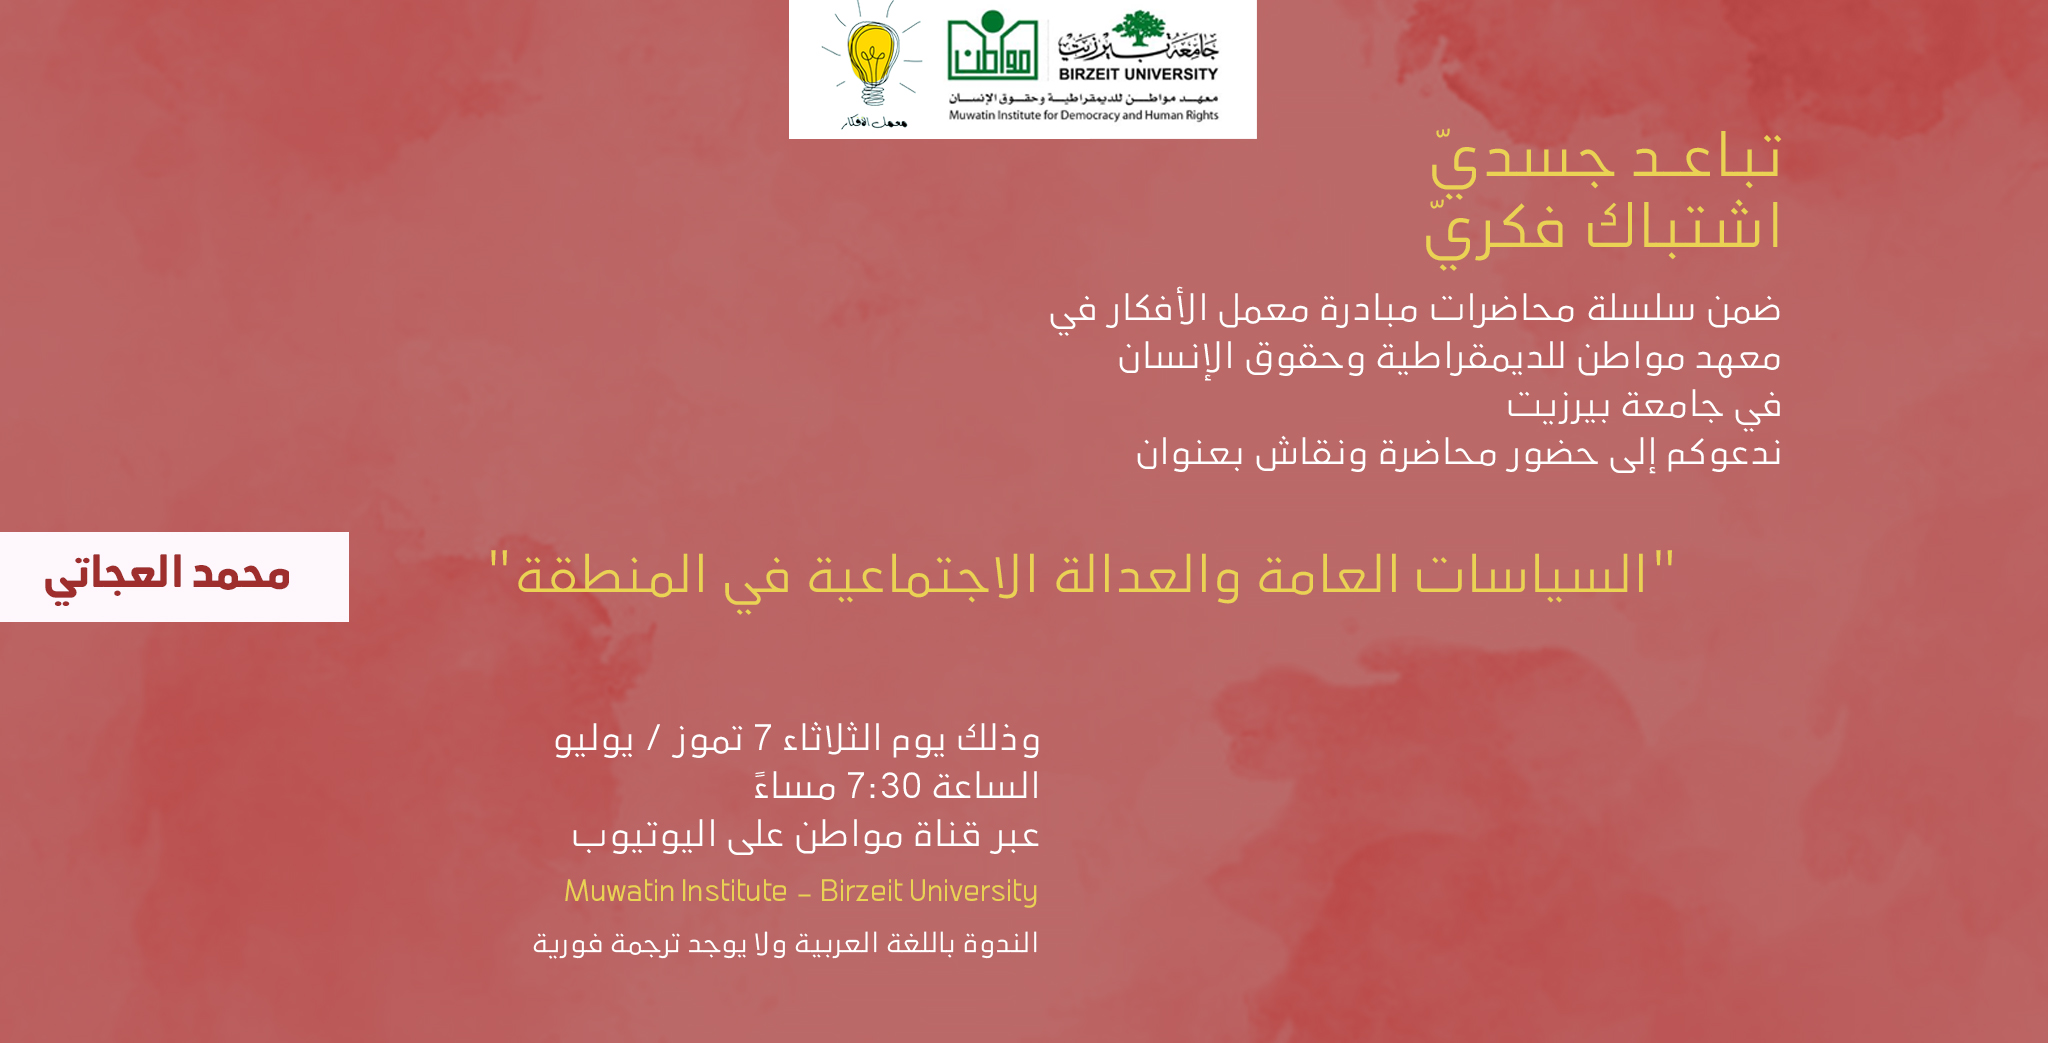 Mohamed Elagati Event Banner